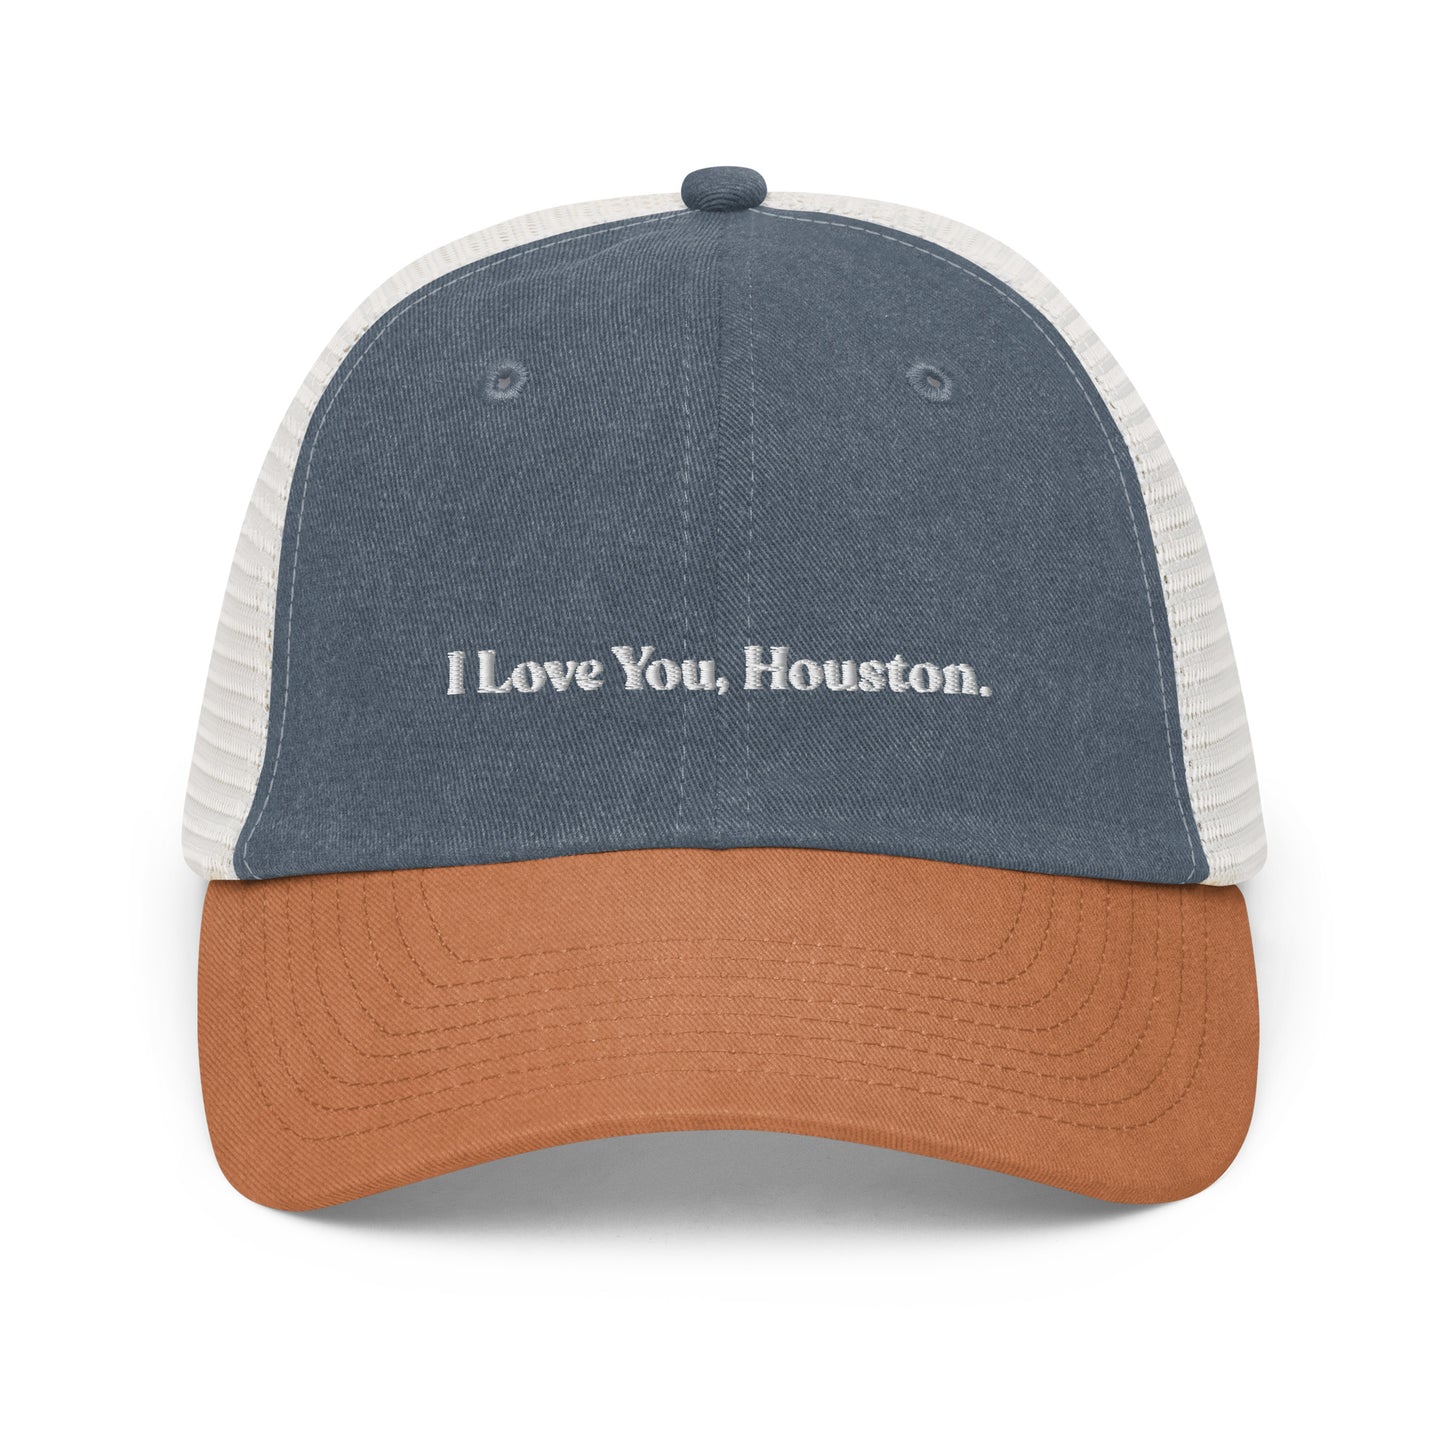 I Love You, Houston Two-Tone Hat